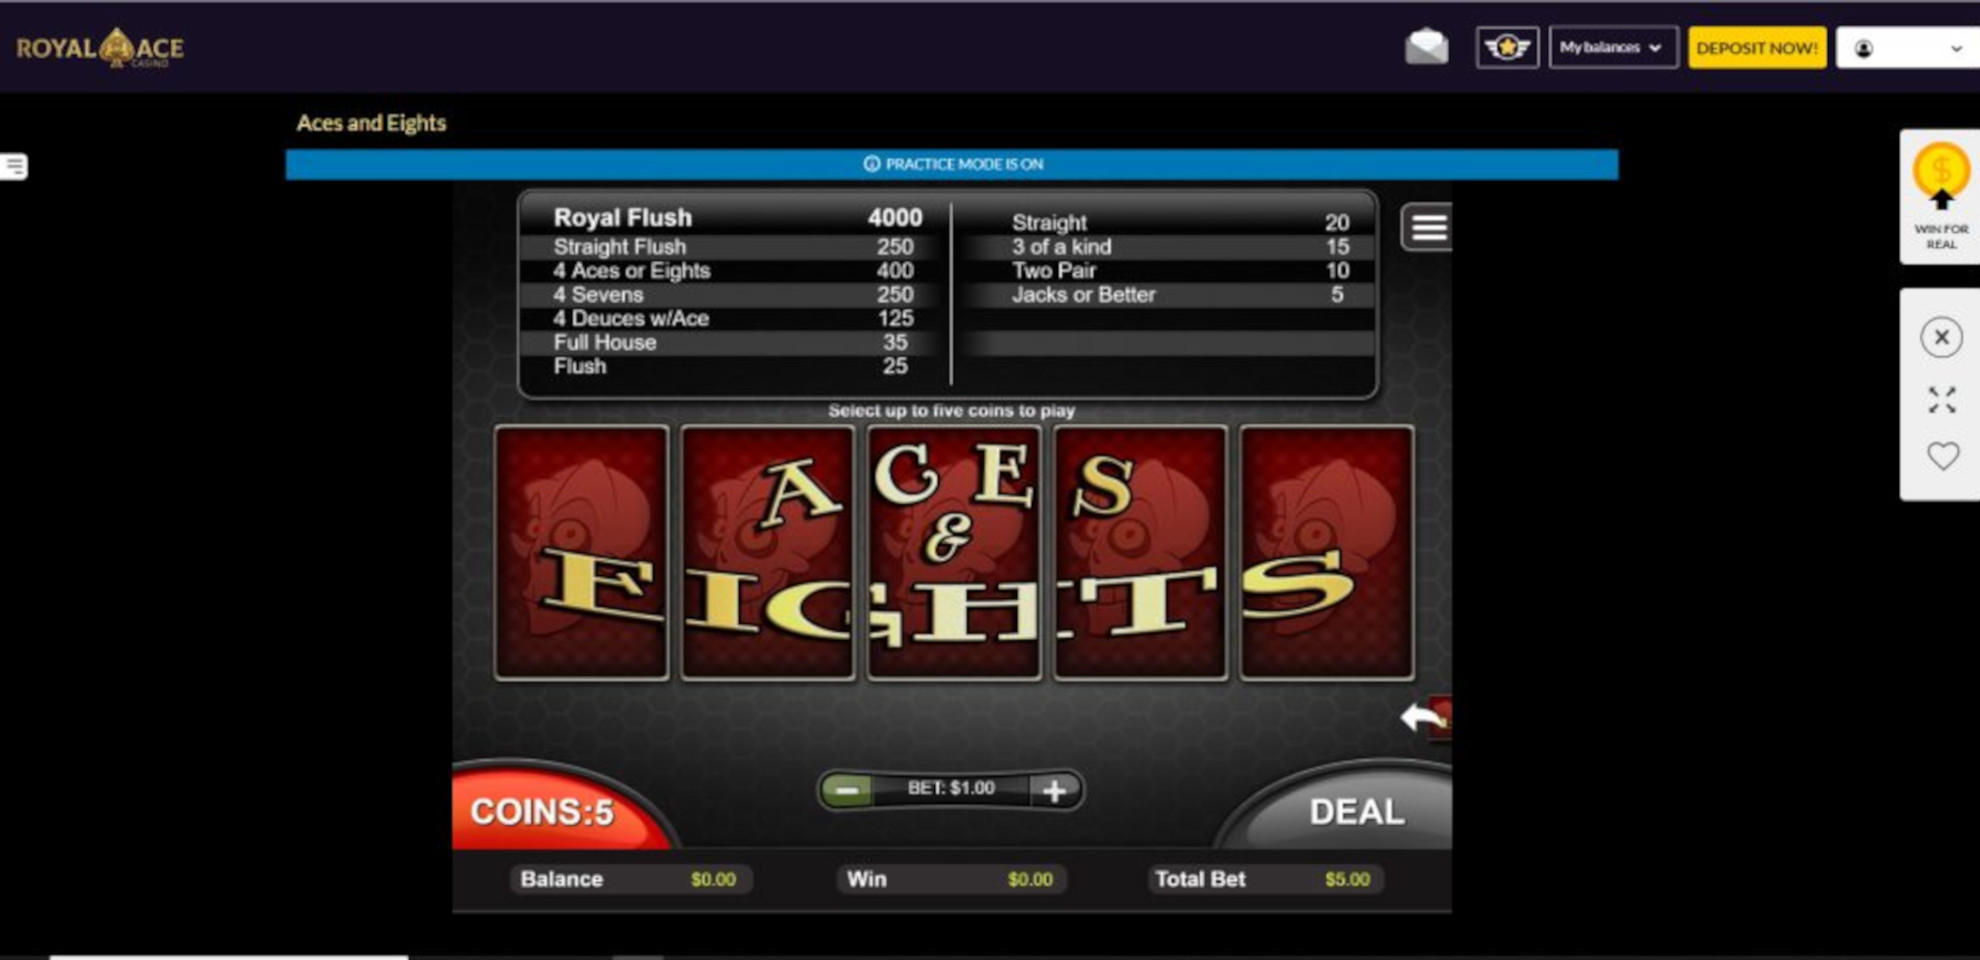 royal ace new casino bonus codes 127.00